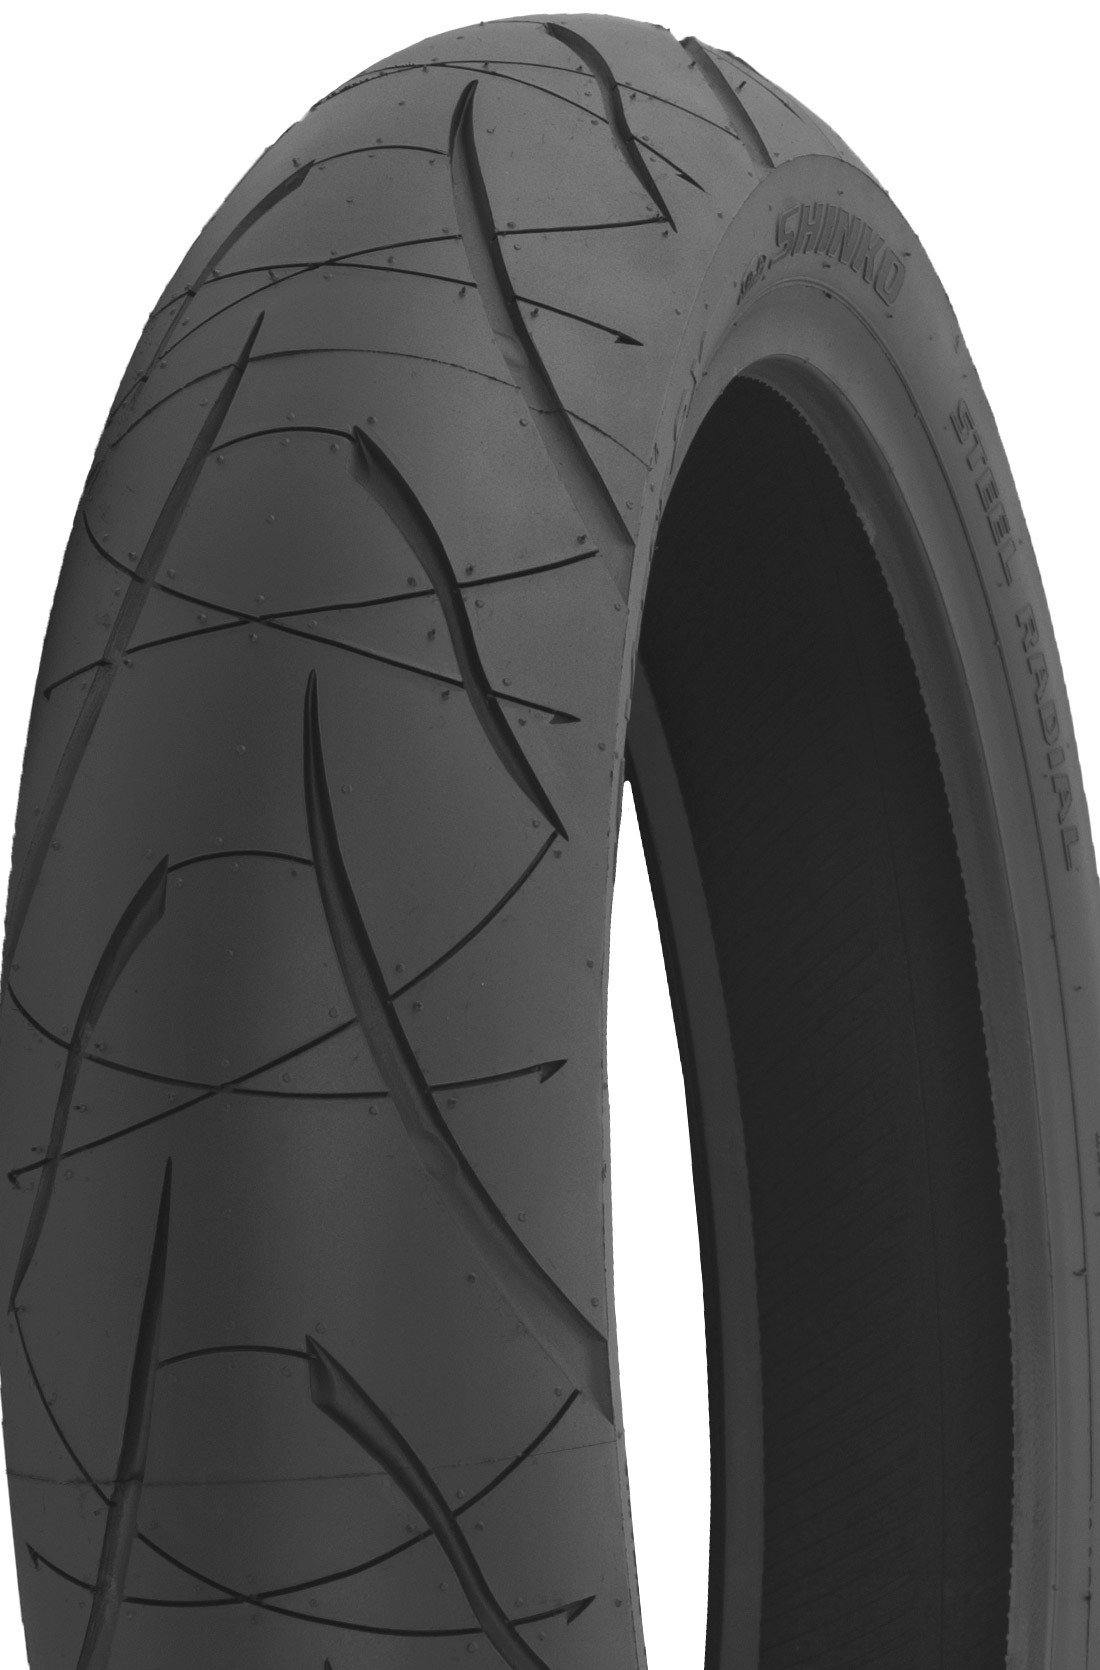 Shinko Tires R016 Series (190/50ZR-17) - Durian Bikers